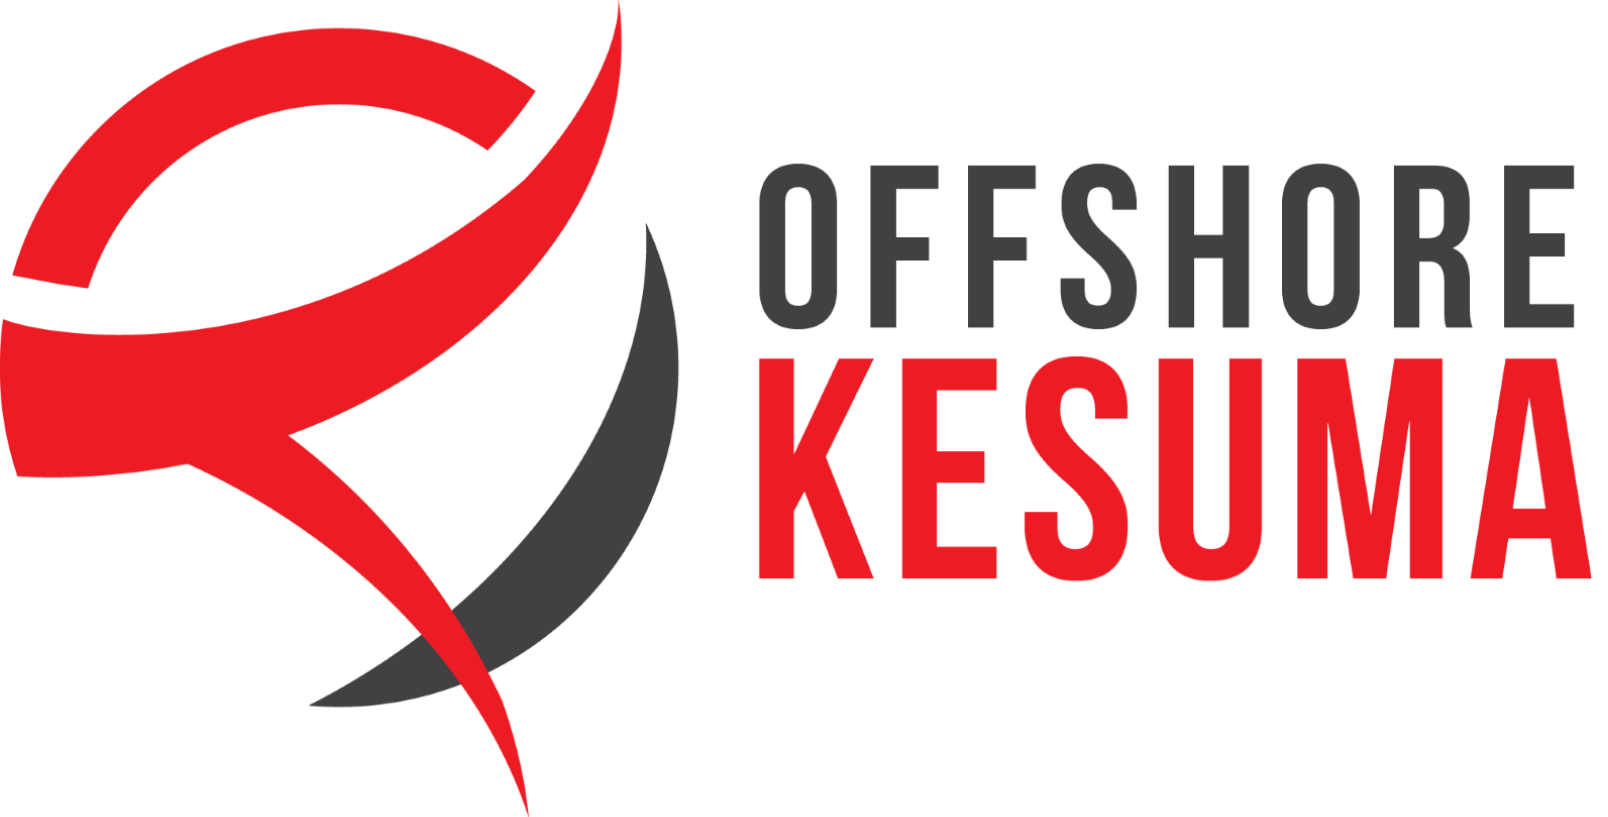 Offshore Kesuma